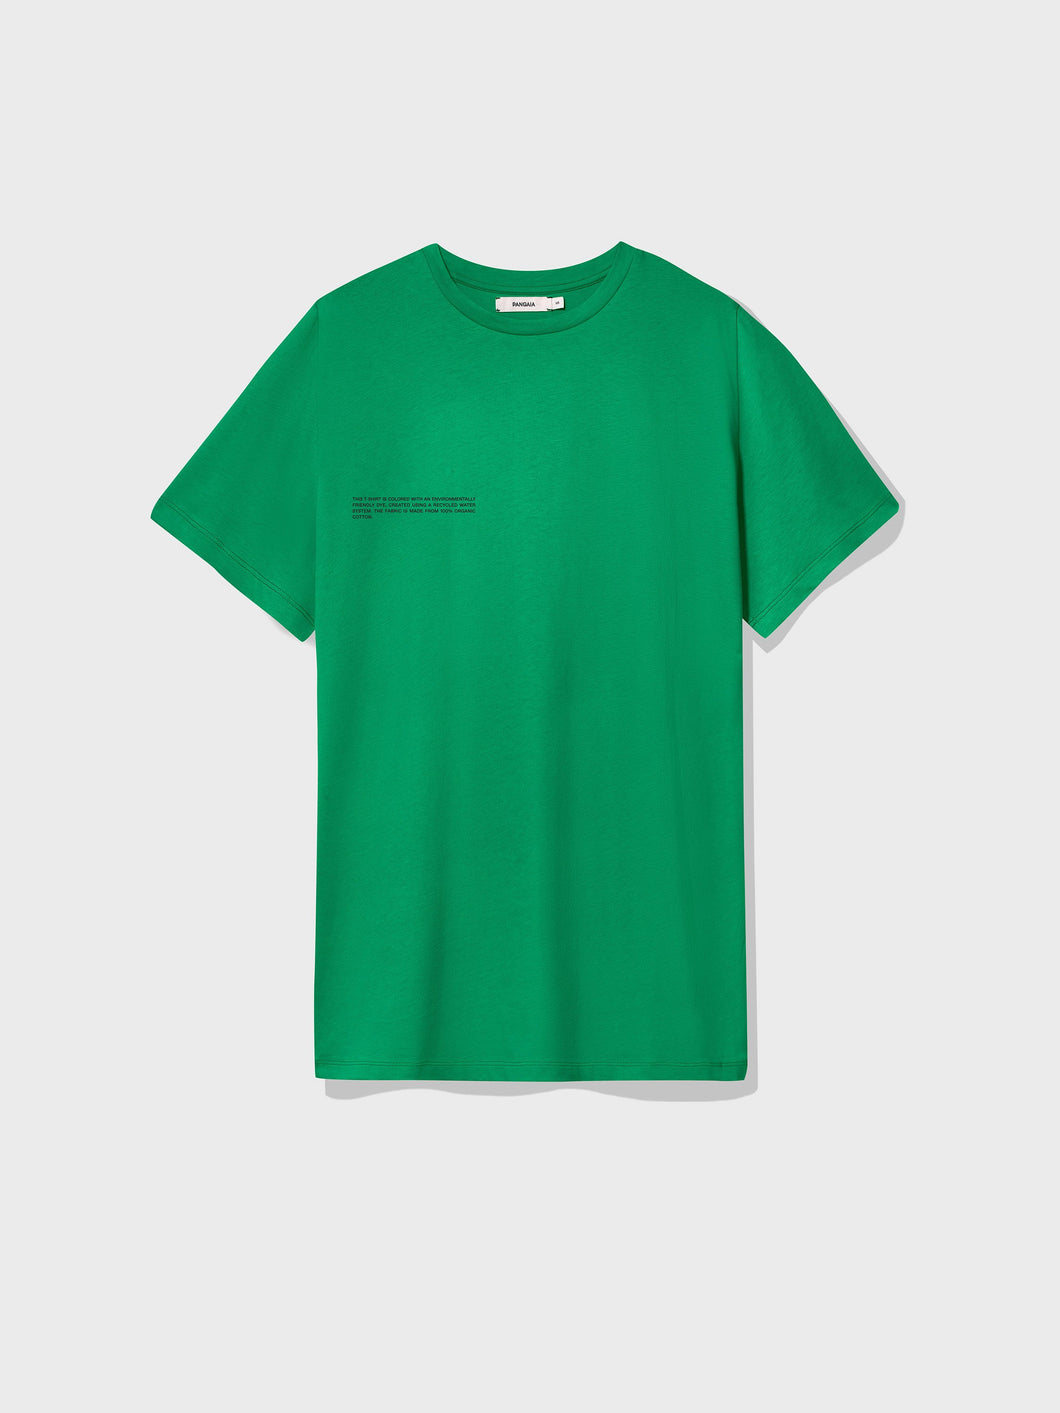 Marine Green T-Shirt